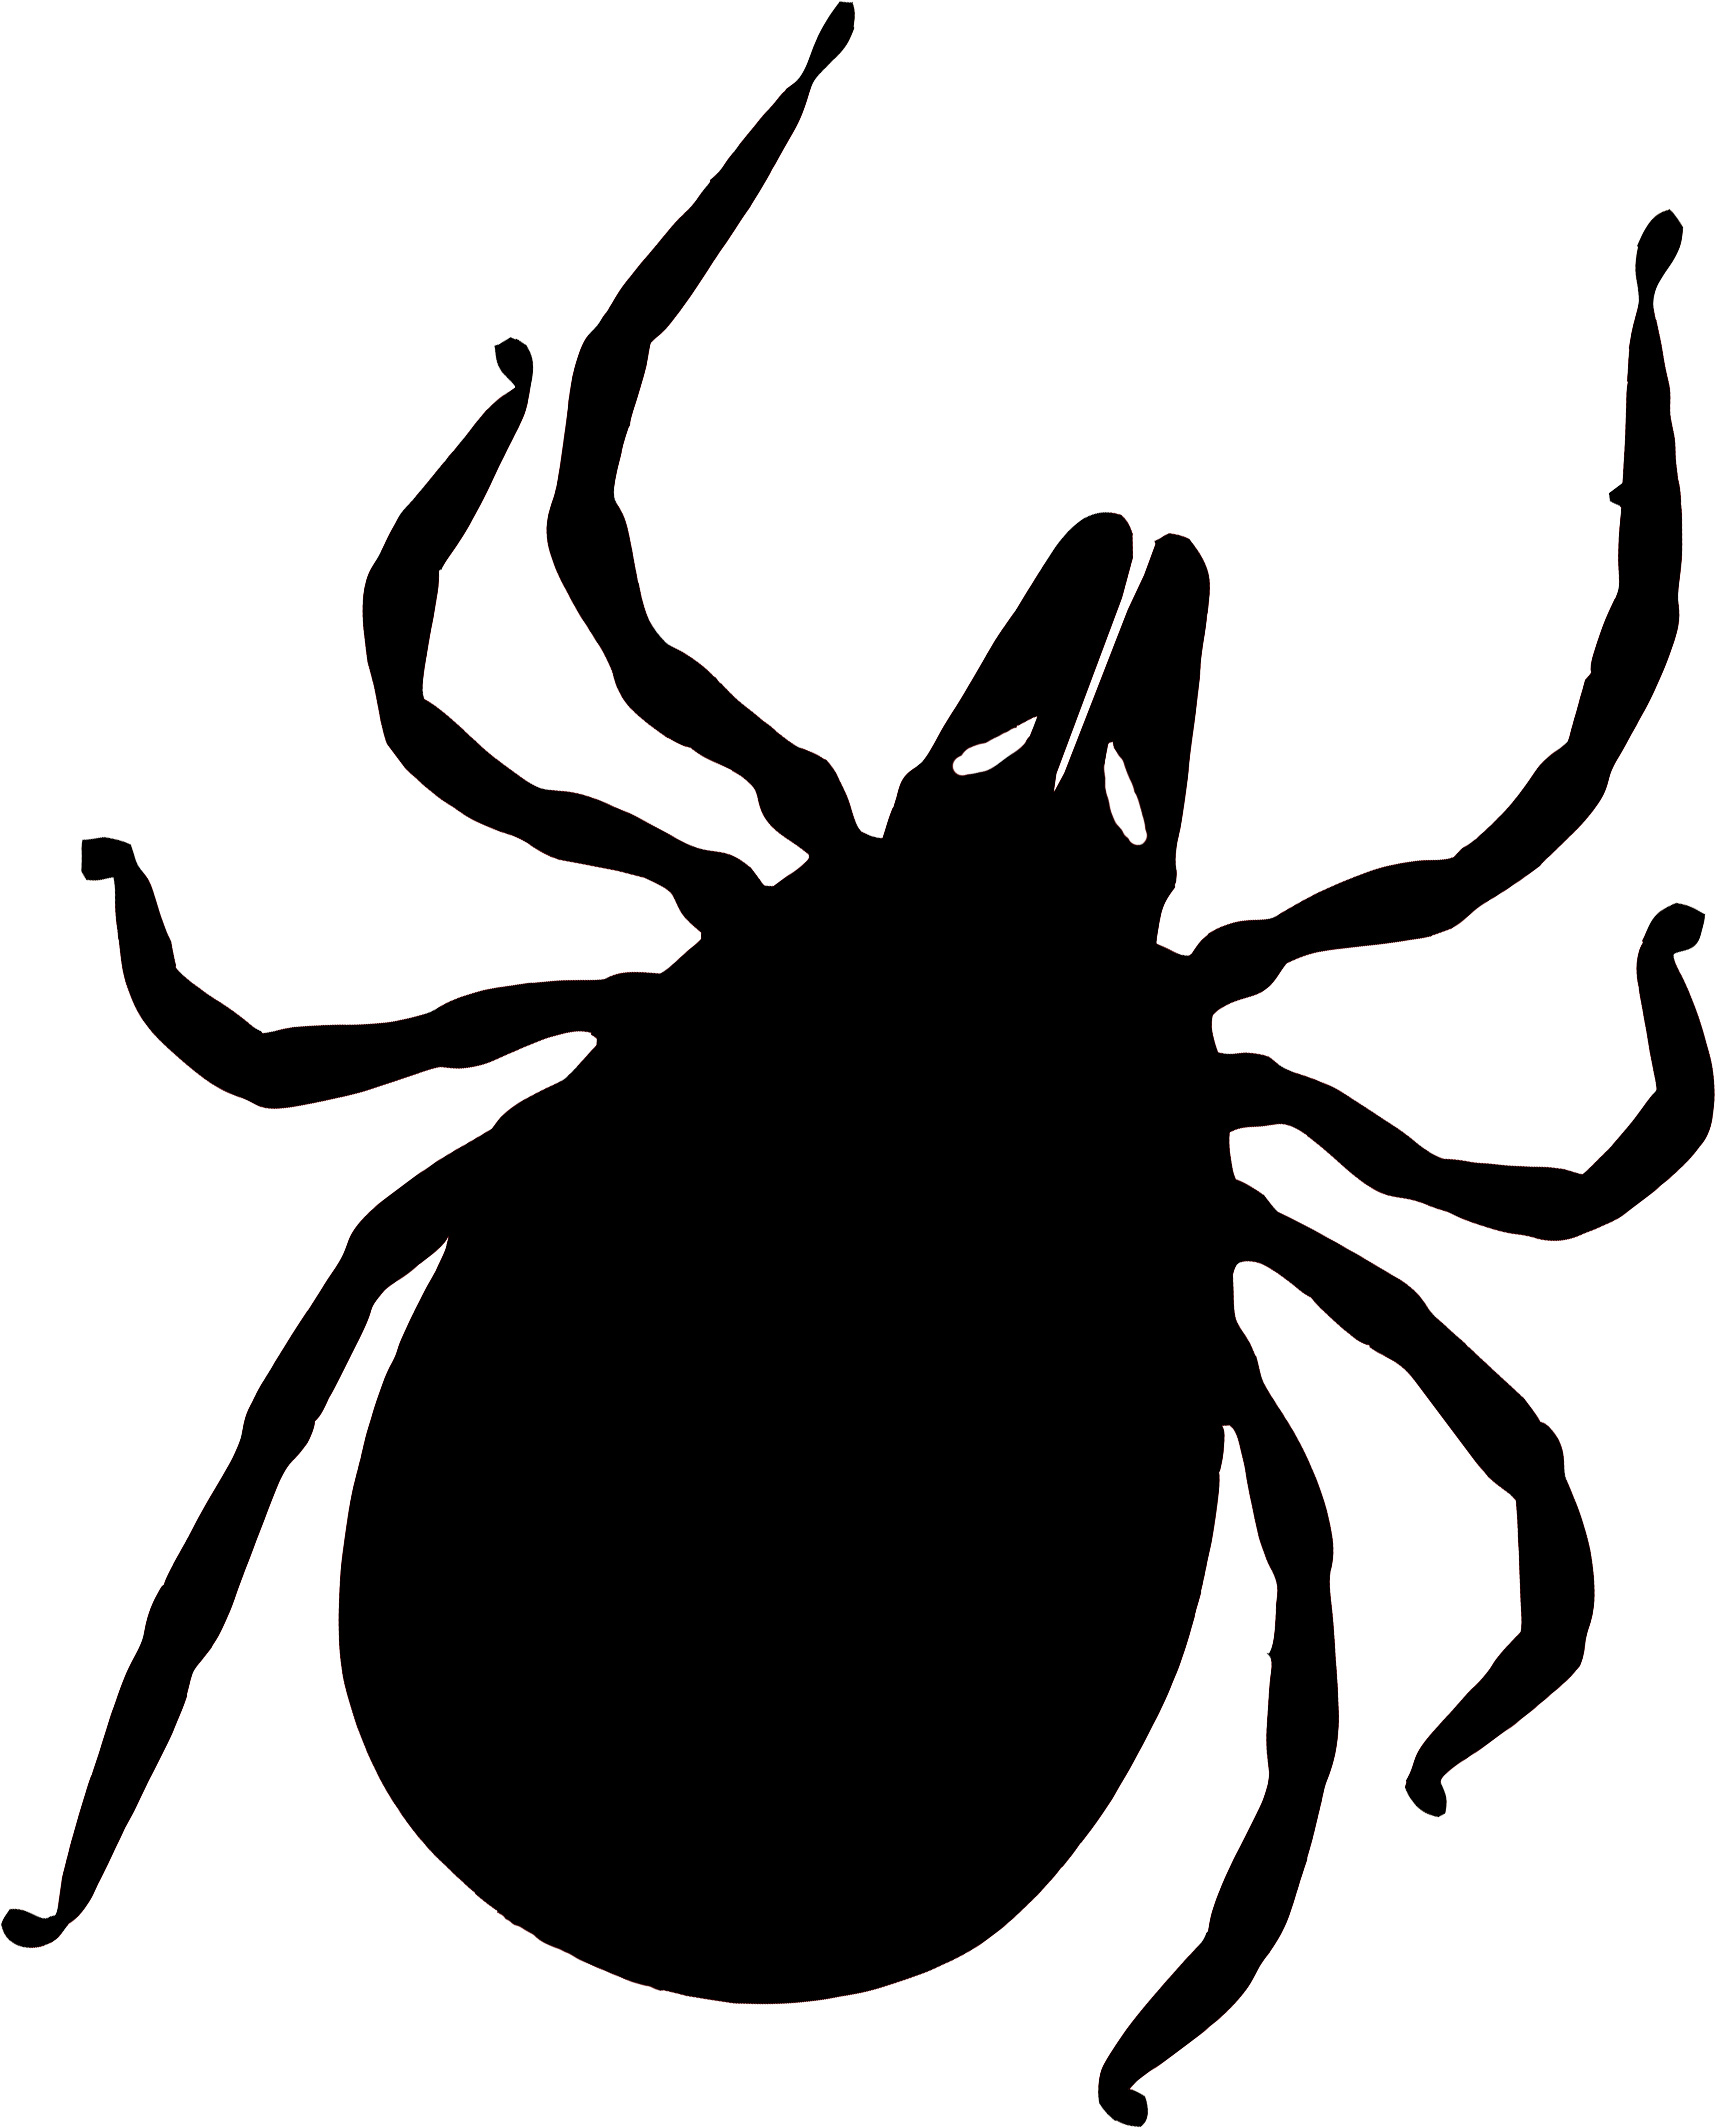 3,200+ Tick Bug Illustrations, Royalty-Free Vector Graphics & Clip Art -  iStock | Tick bug icon, Tick bug illustration, Tick bug vector